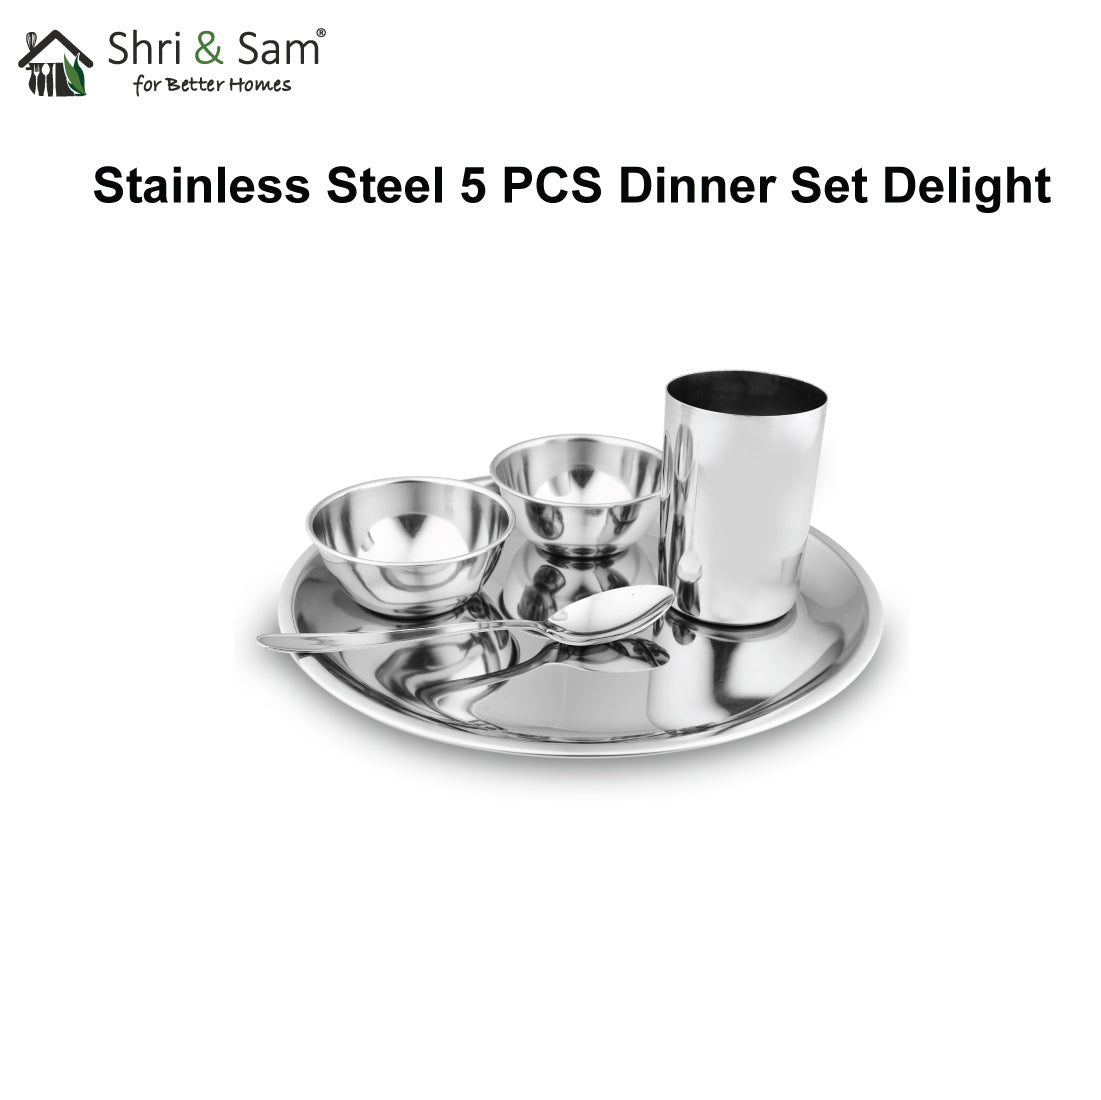 Stainless Steel 5 PCS Thali Set Delight